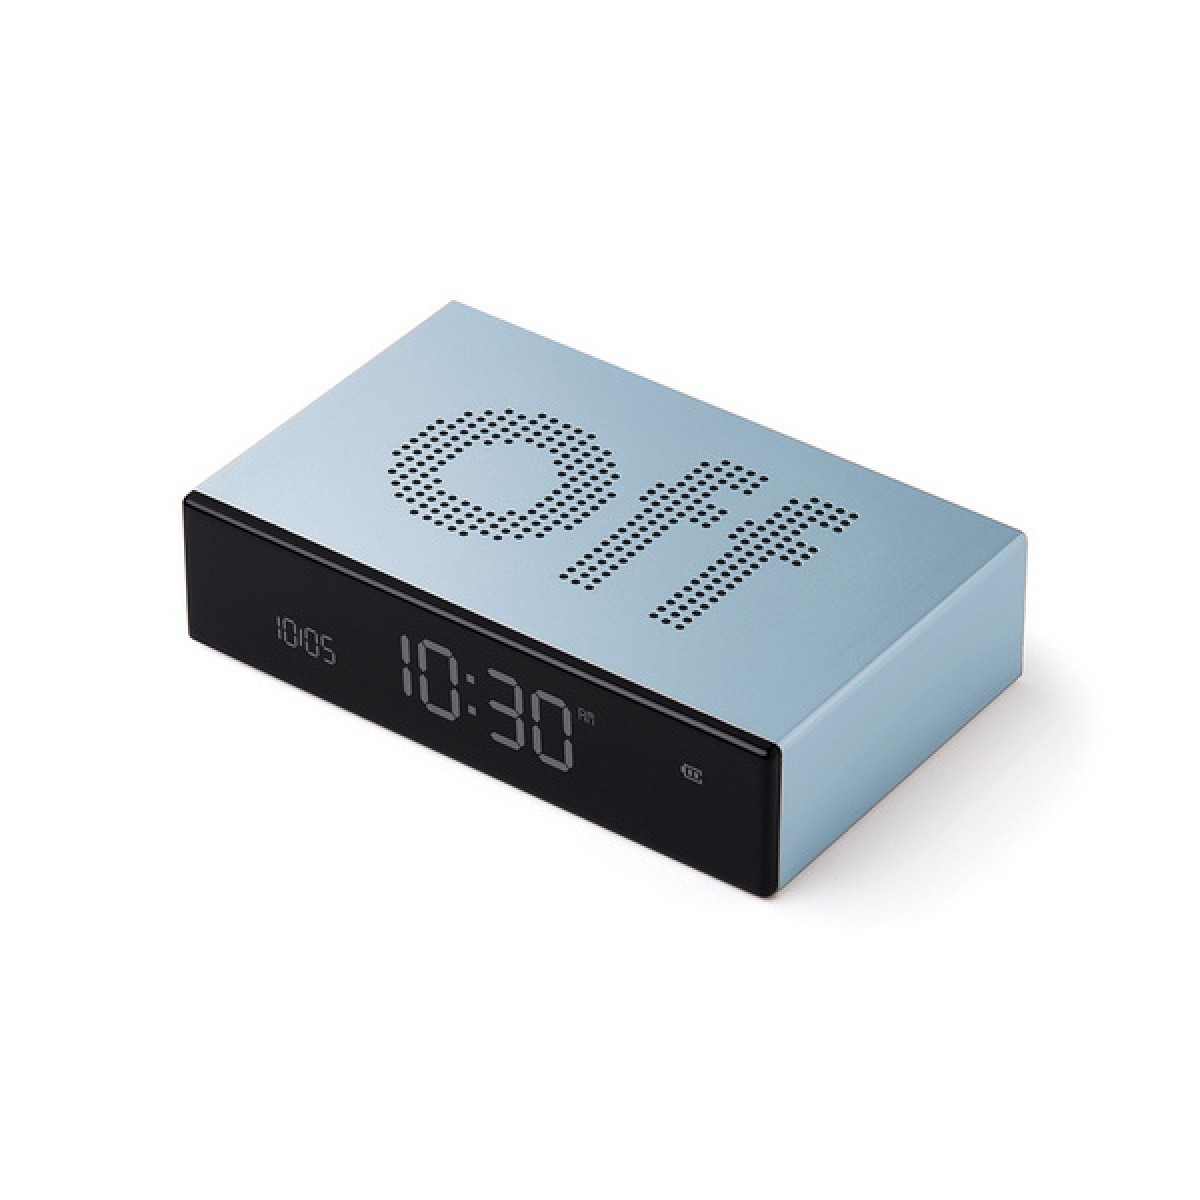 Lexon - Flip Premium - Reversible LCD alarm clock - Light Blue